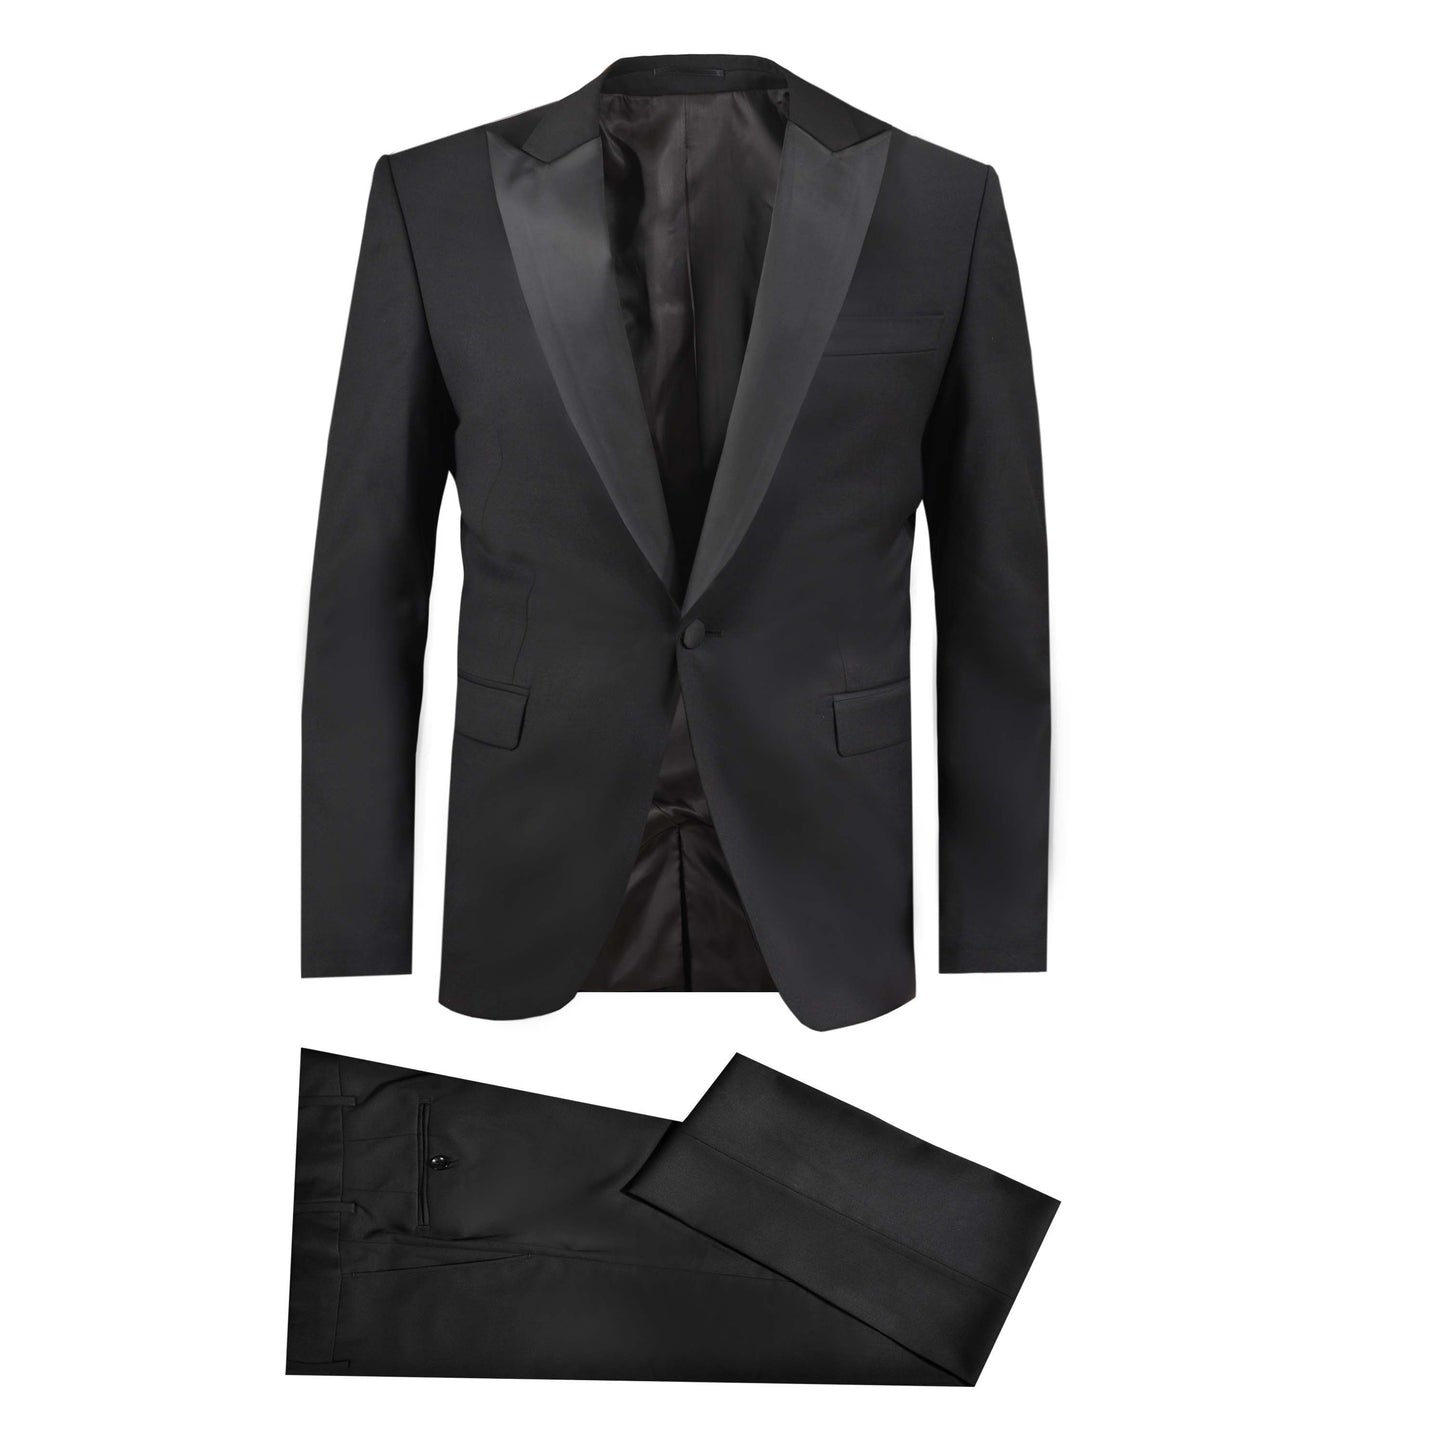 2H black Peaked Lapel Wedding Suit